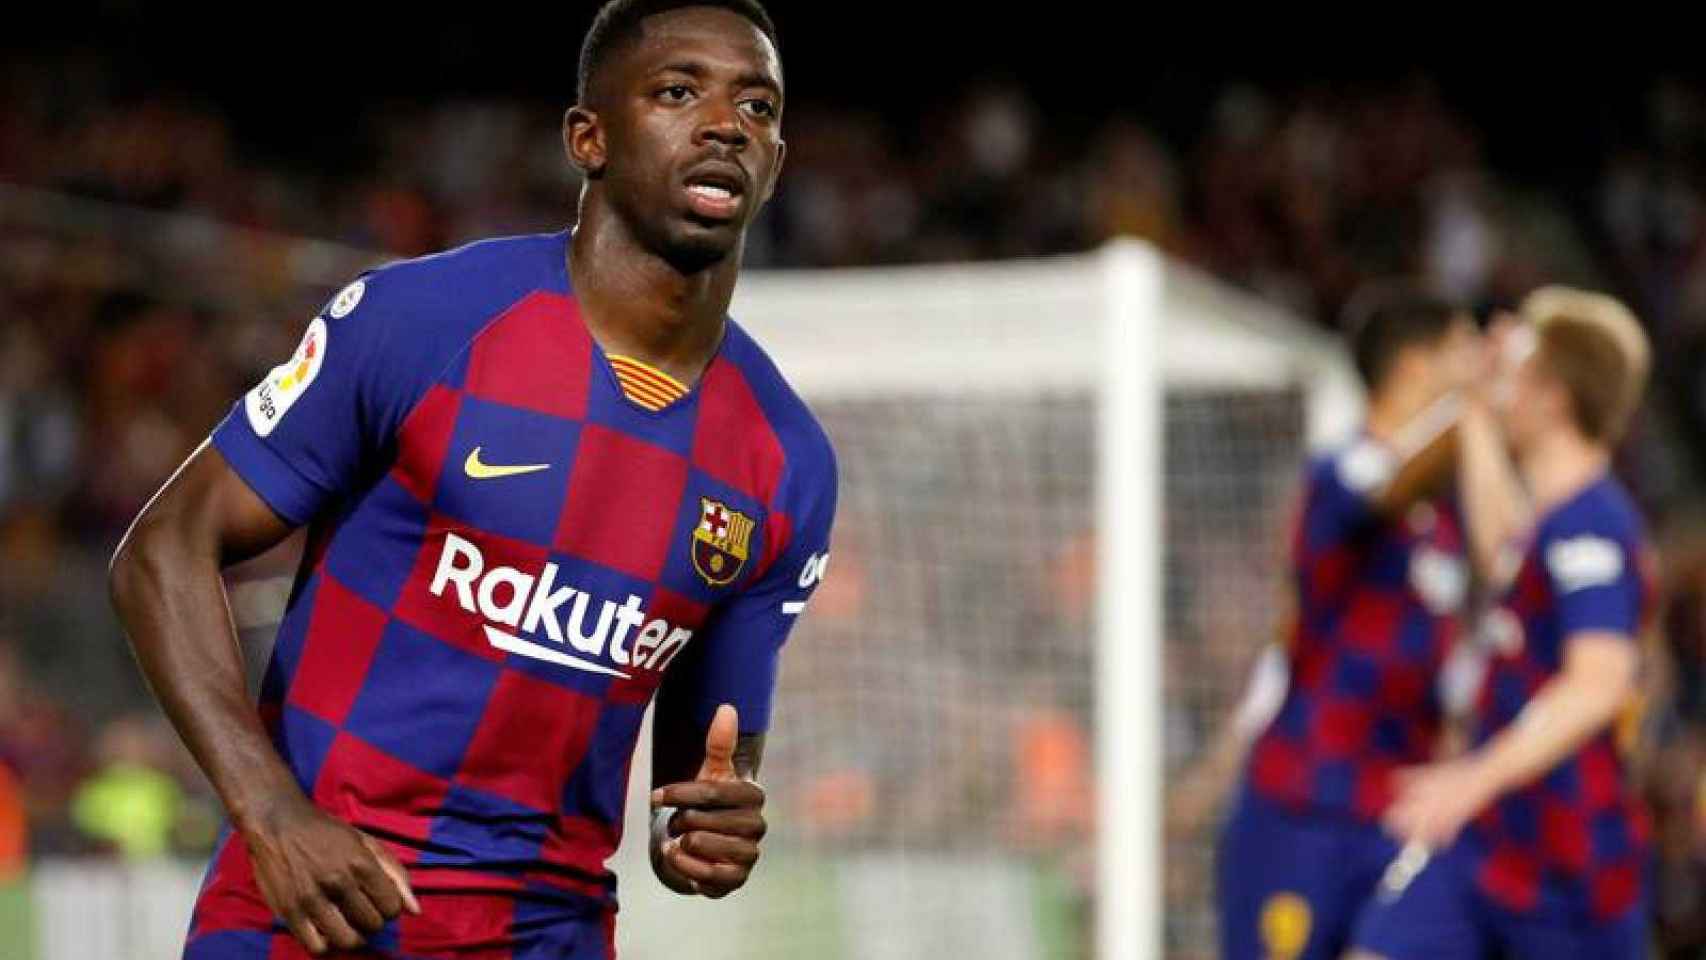 Ousmane Dembelé en un partido del Barça / EFE